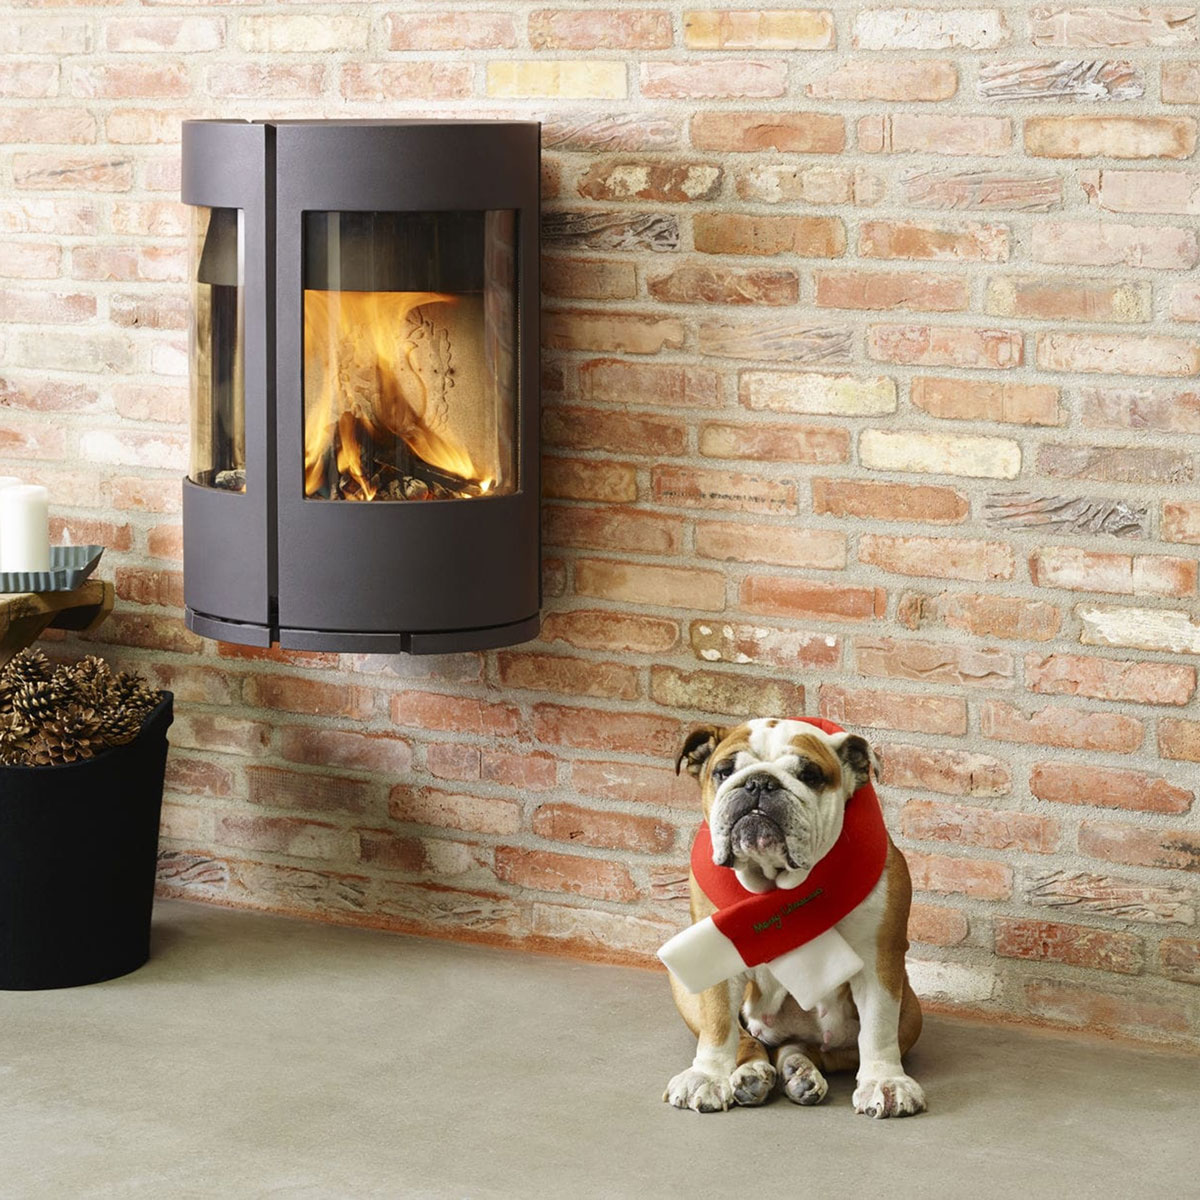 Morso 6670 wall hung wood heater with bulldog sitting next to it